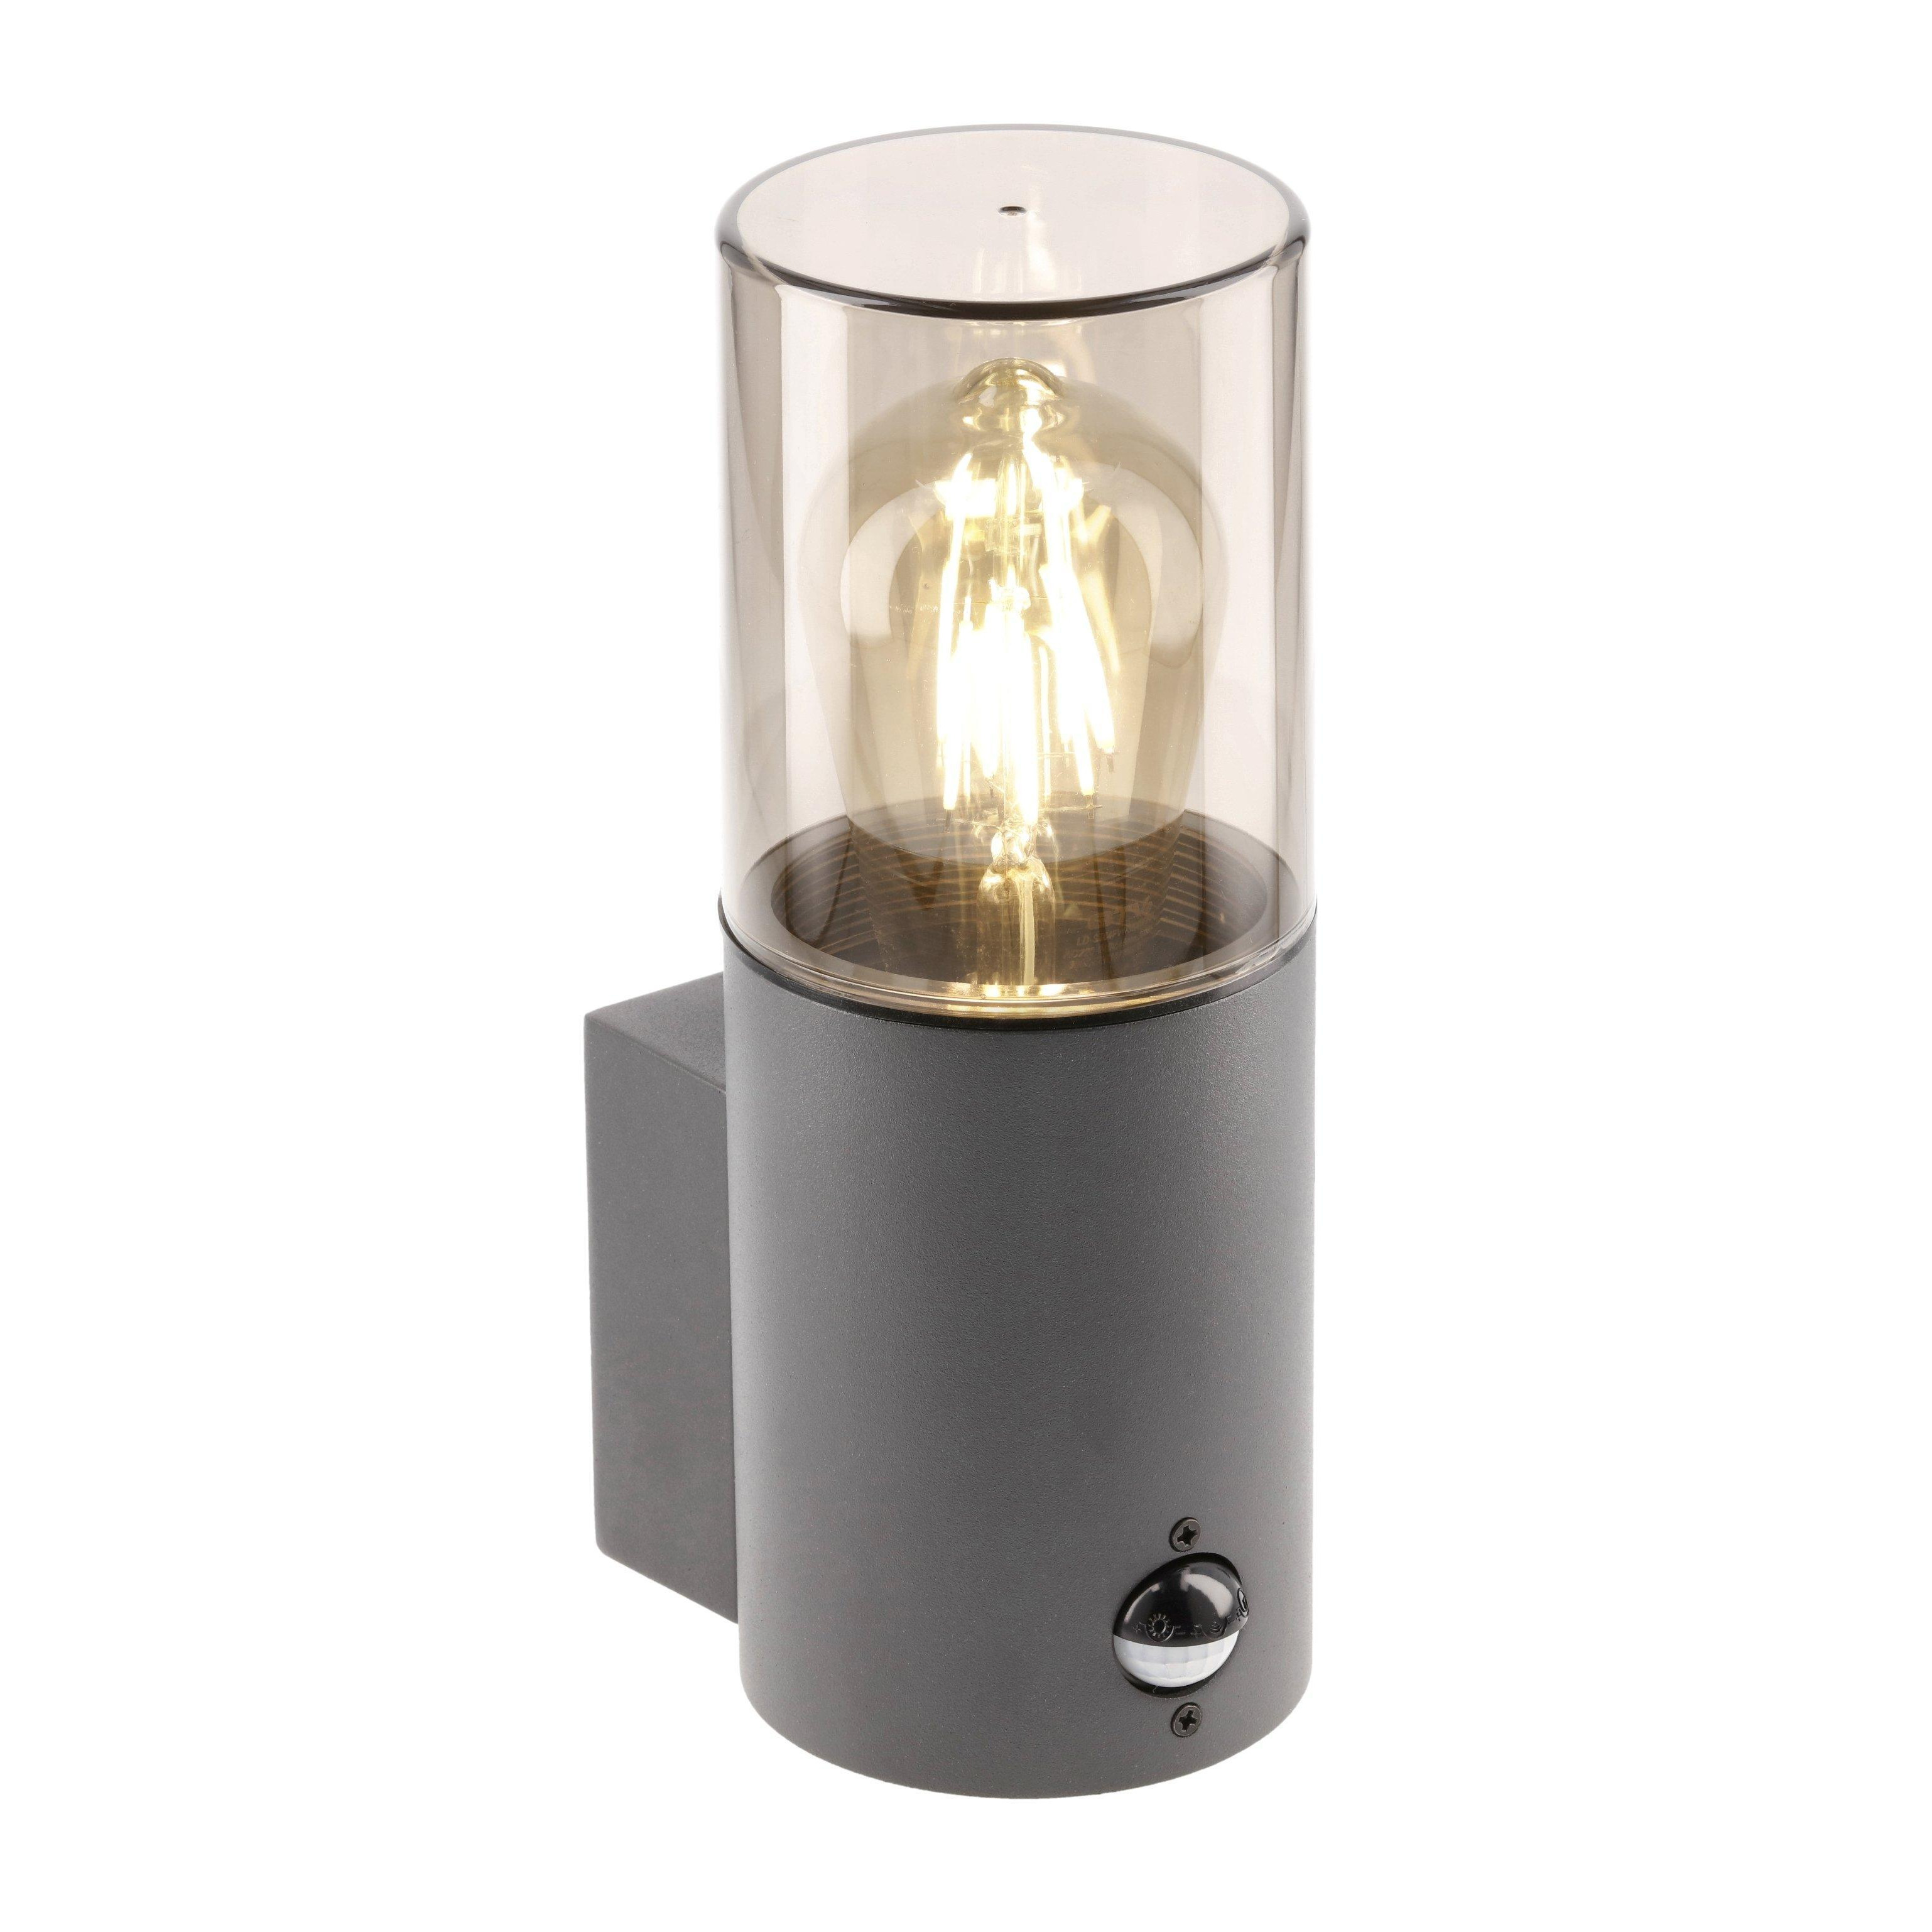 CGC Lighting 'Bluebell' Dark Grey Cylinder Wall Light with PIR Motion Sensor - image 1